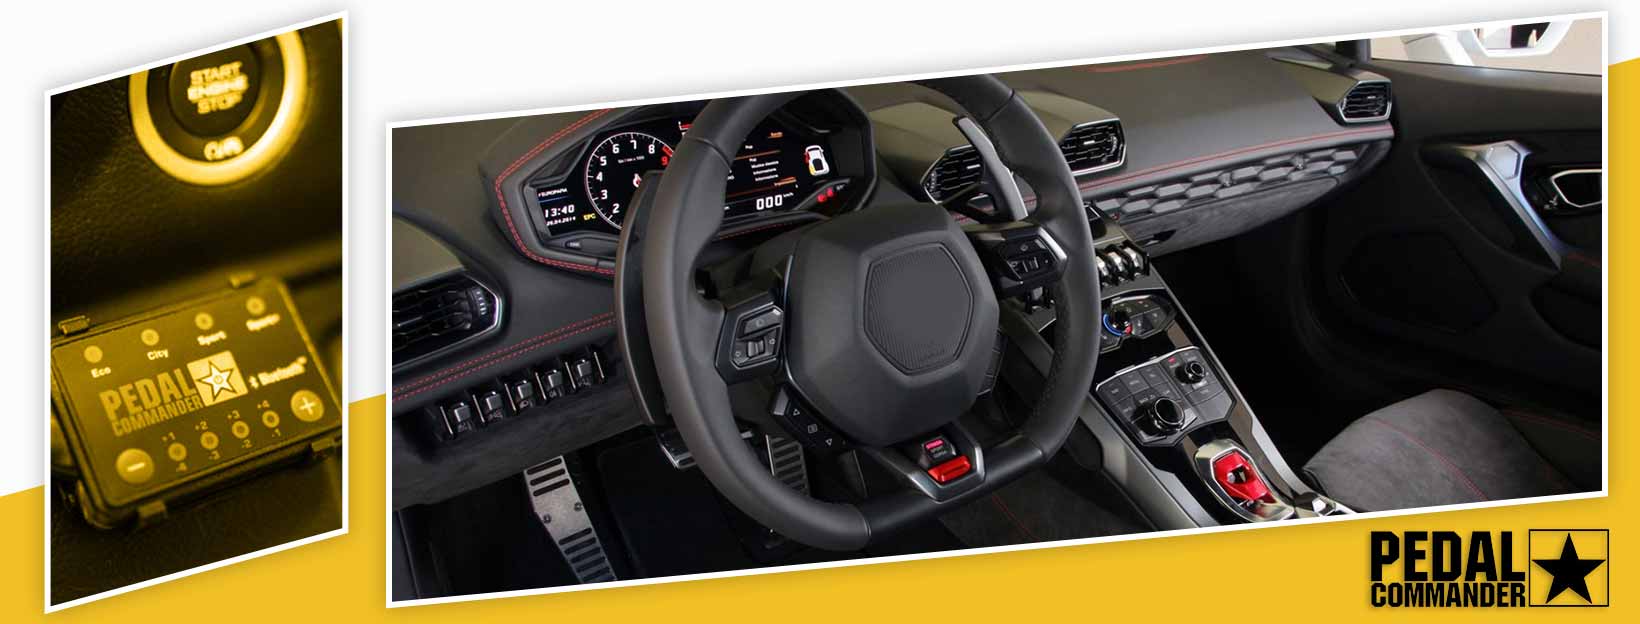 Pedal Commander for Lamborghini Huracan - interior